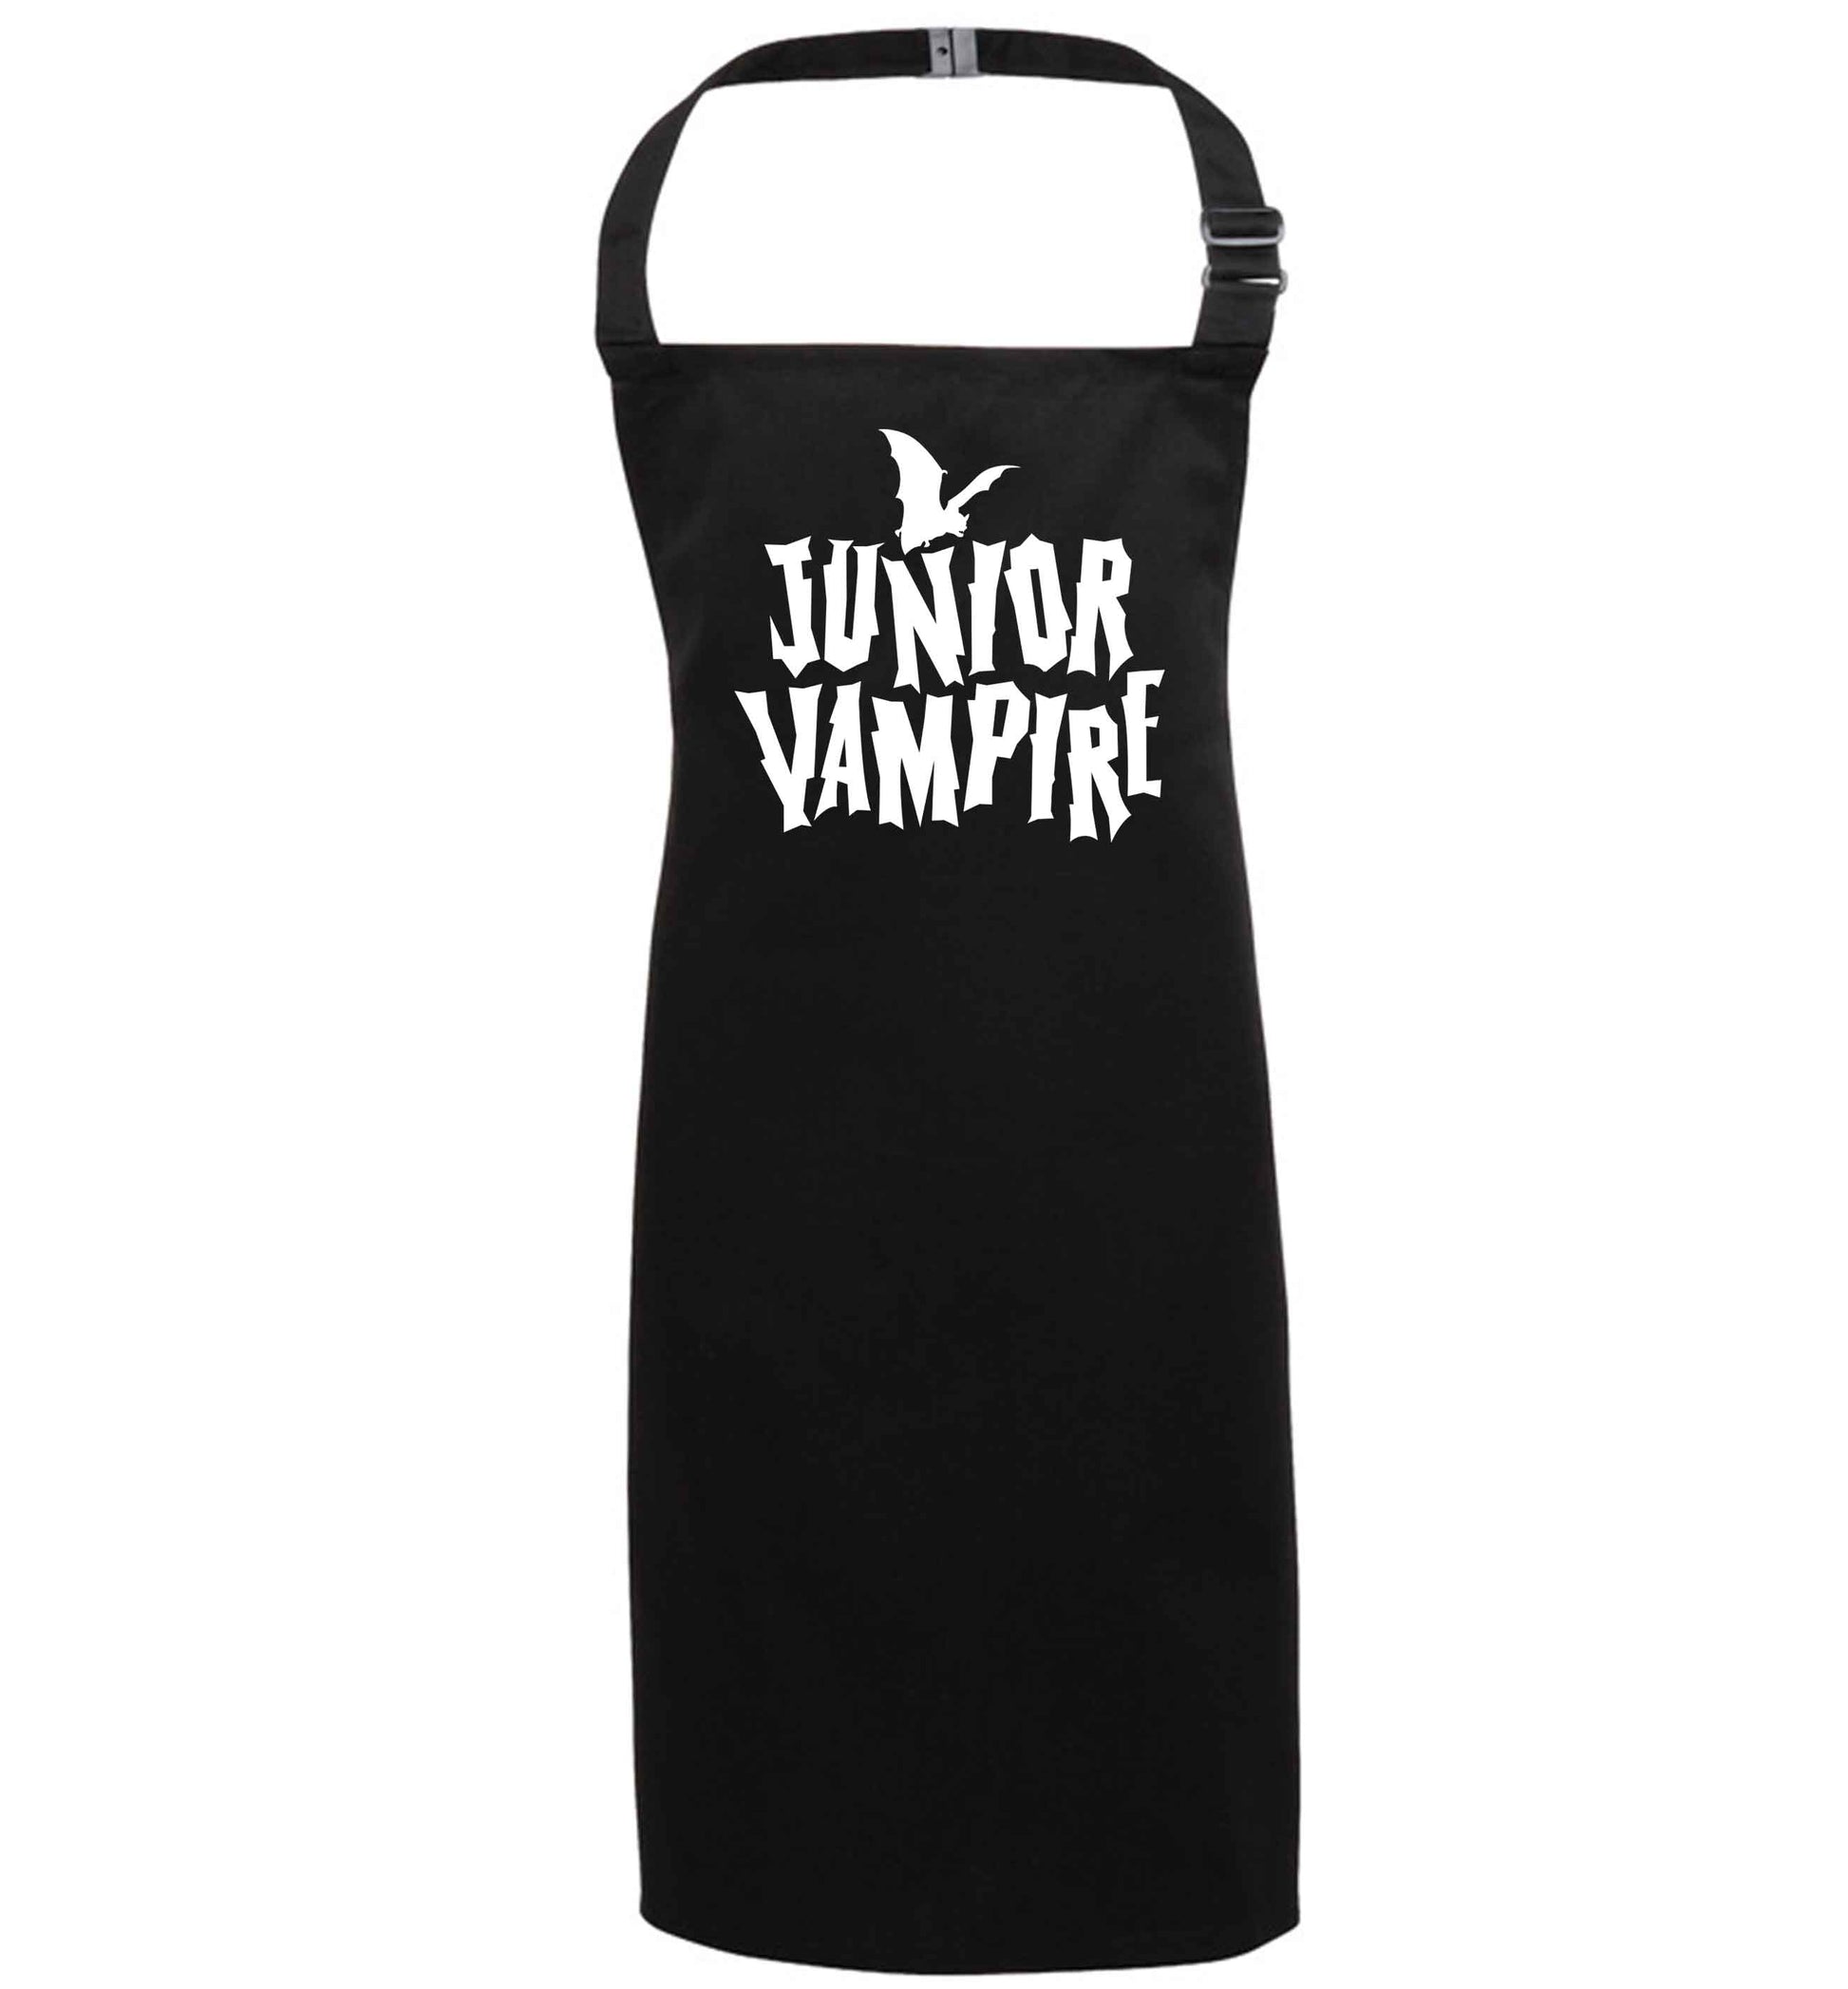 Junior vampire black apron 7-10 years